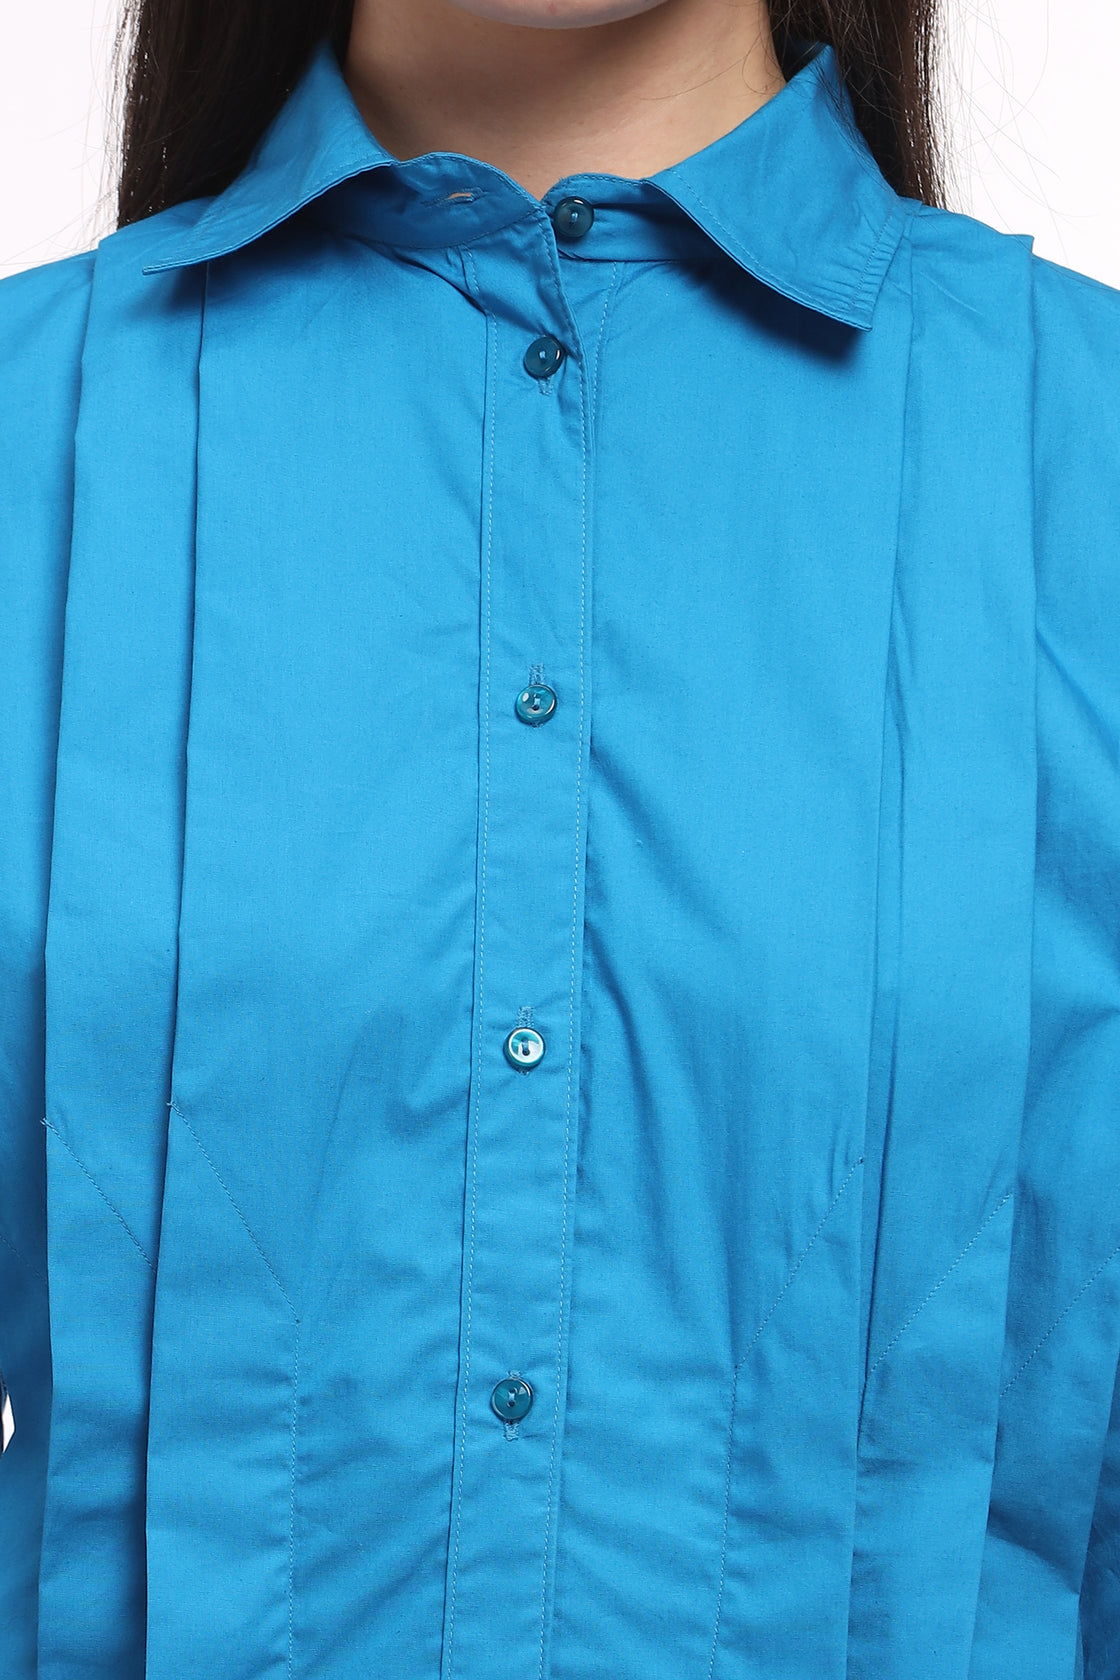 Sia Pleated Blue Shirt